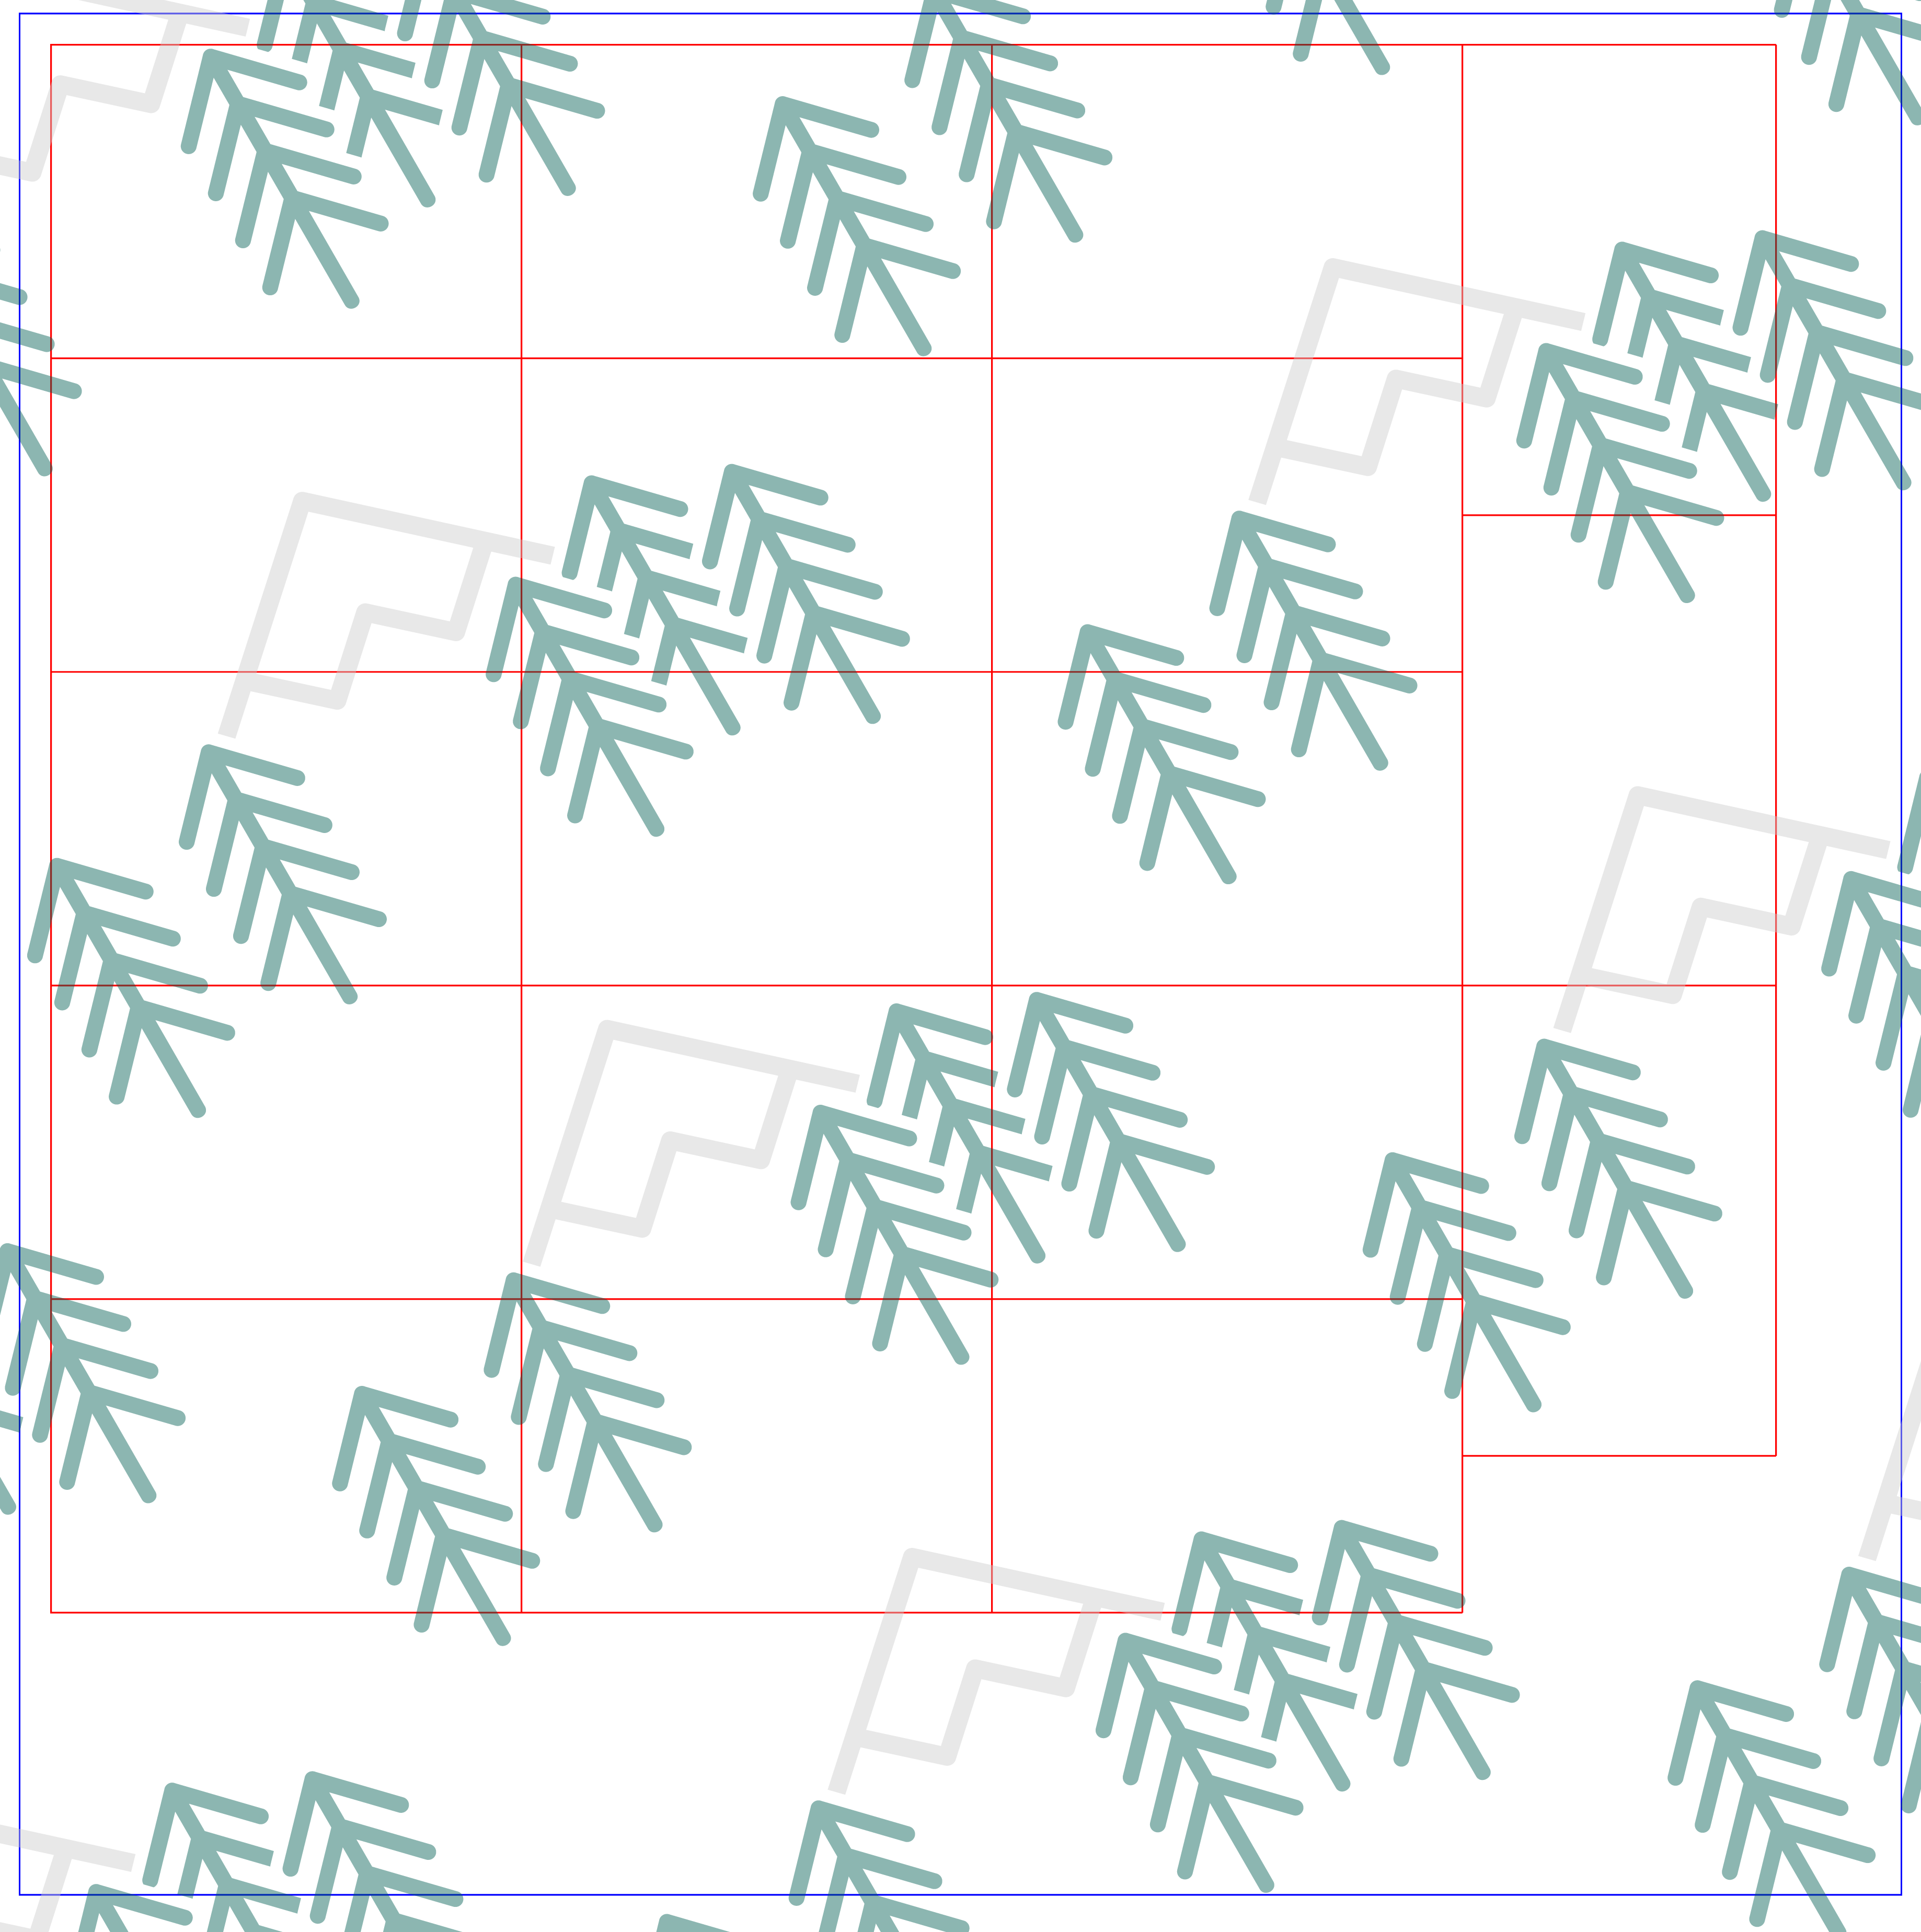 Digital Laser Cutting Template: 2" x 3" Rectangles - 12" x 12" Sheet Size Digital Laser Engraving Files Craftworks NW 